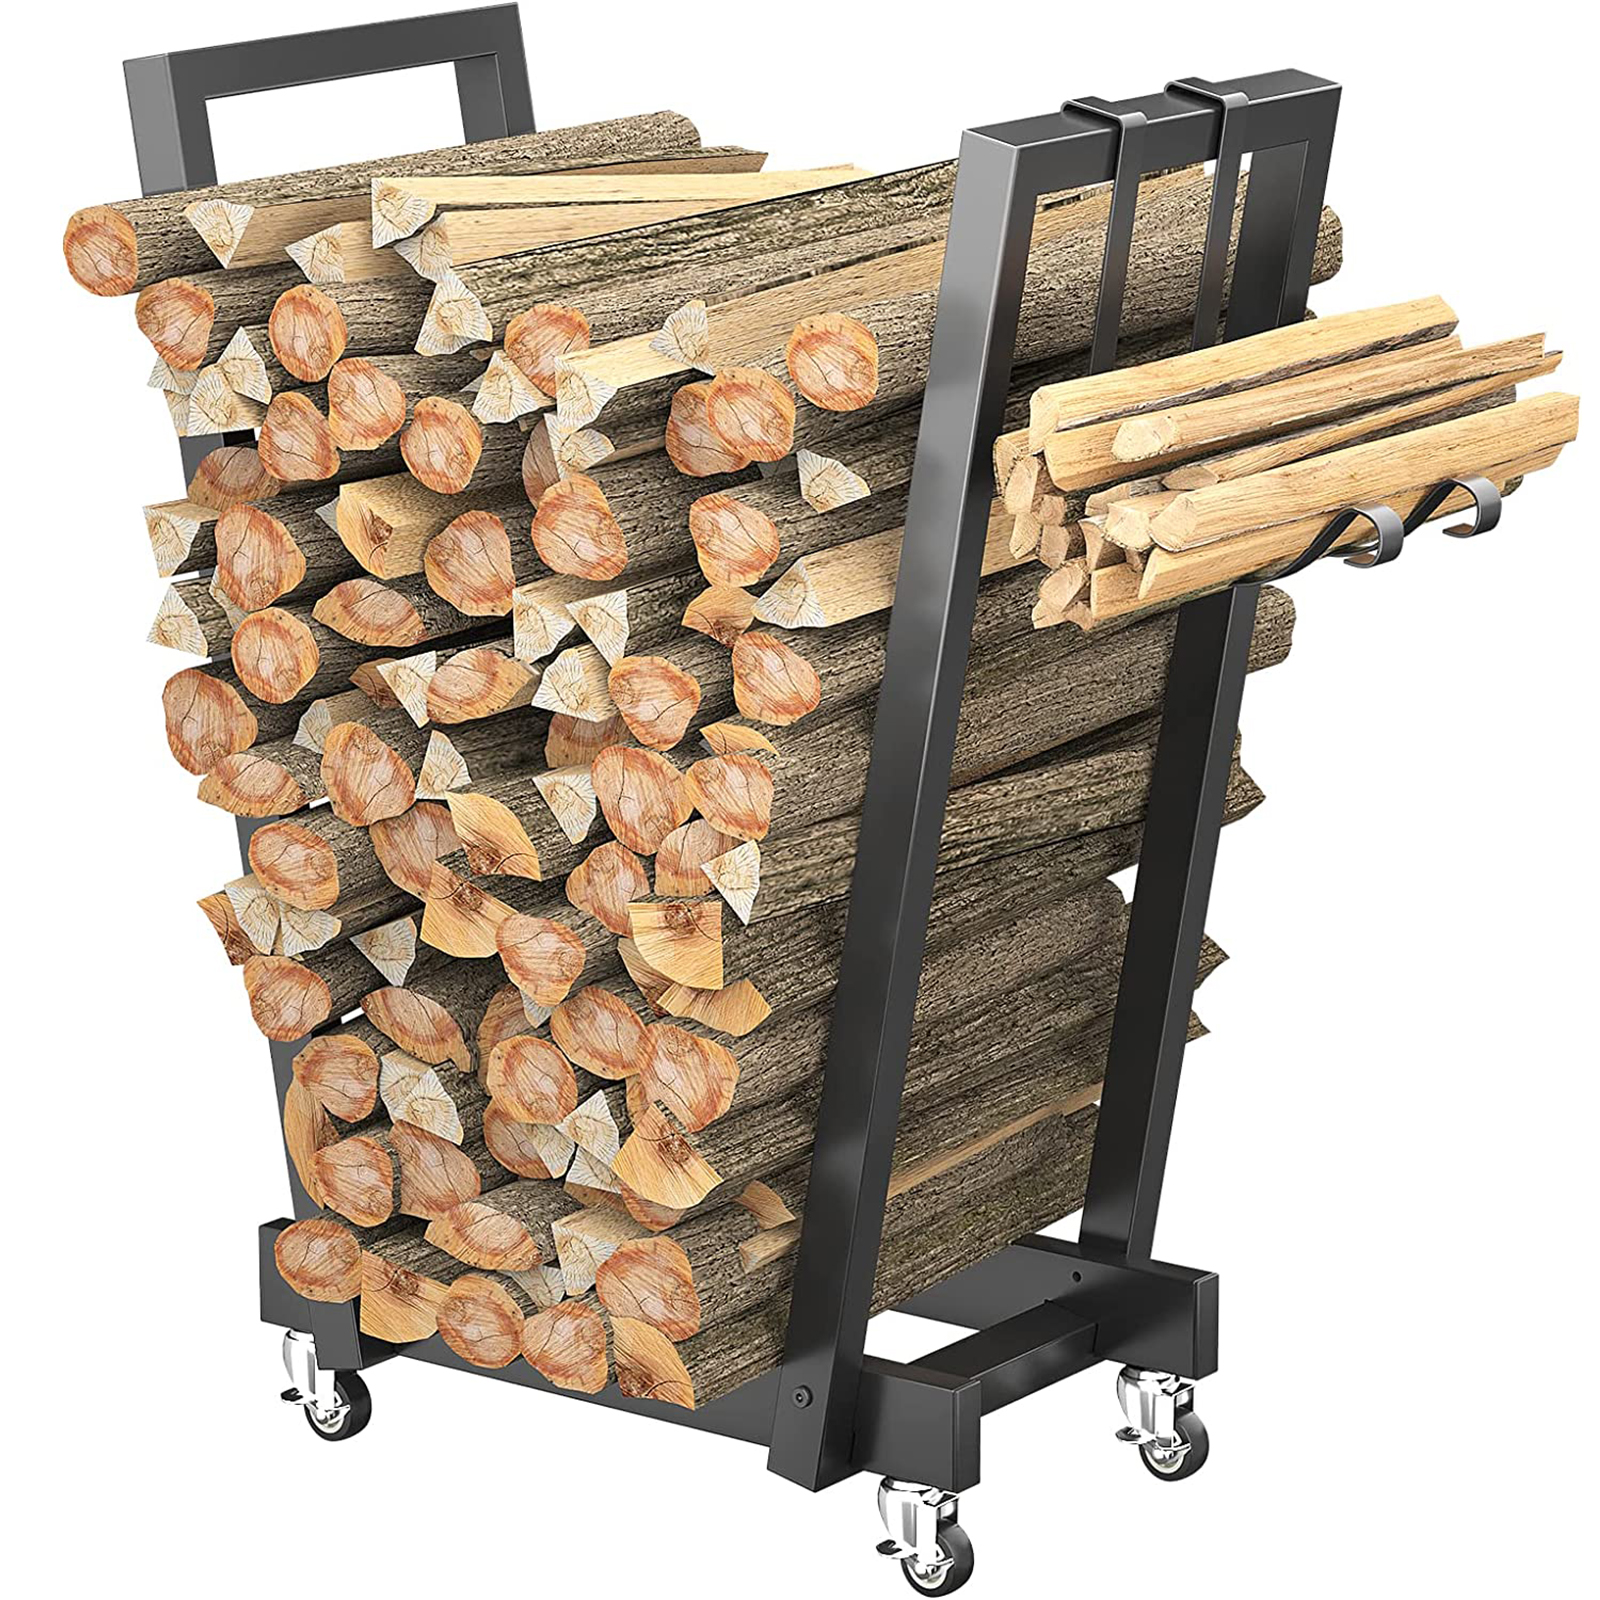 Firewood Storage Rack With Wheels